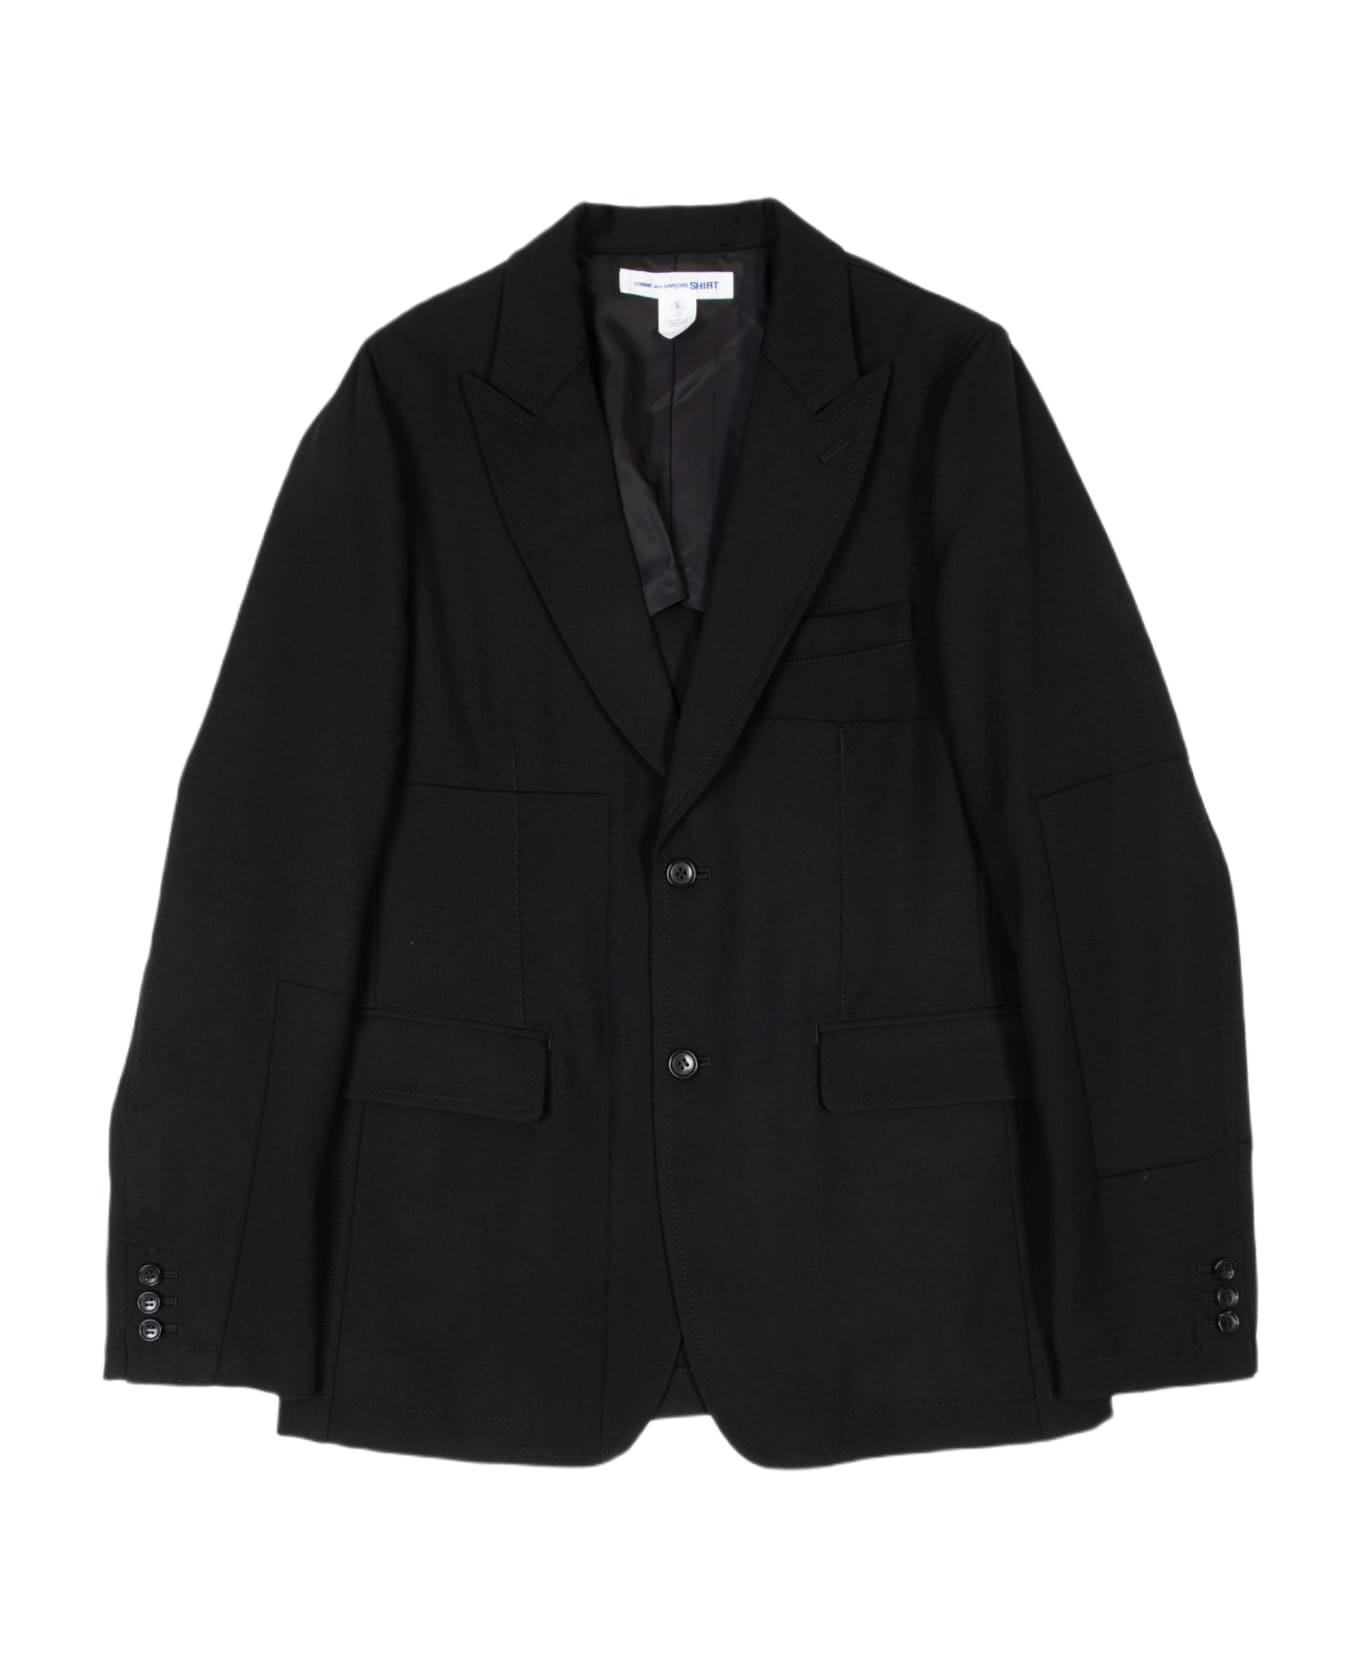 Comme des Garçons Shirt Mens Jacket Woven Black wool patchwork blazer with peak lapel - Nero